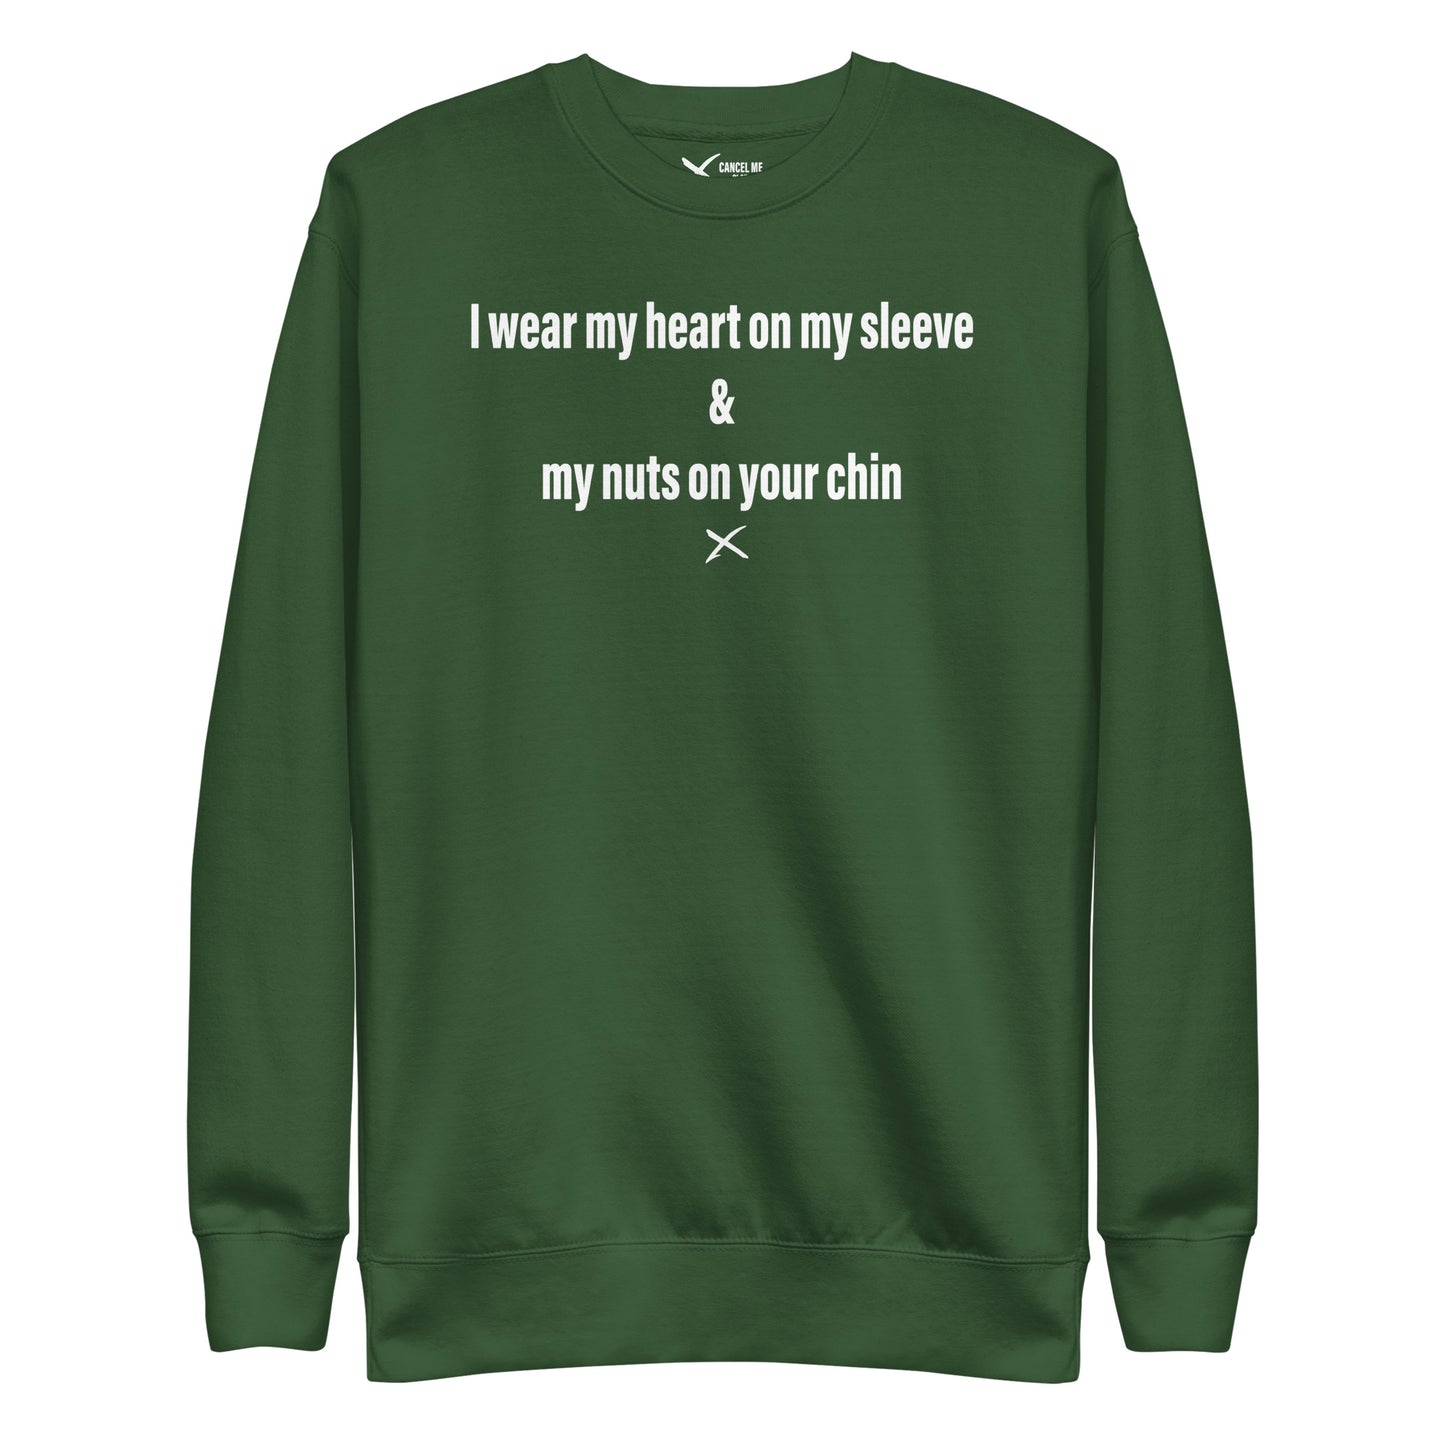 I wear my heart on my sleeve & my nuts on your chin - Sweatshirt